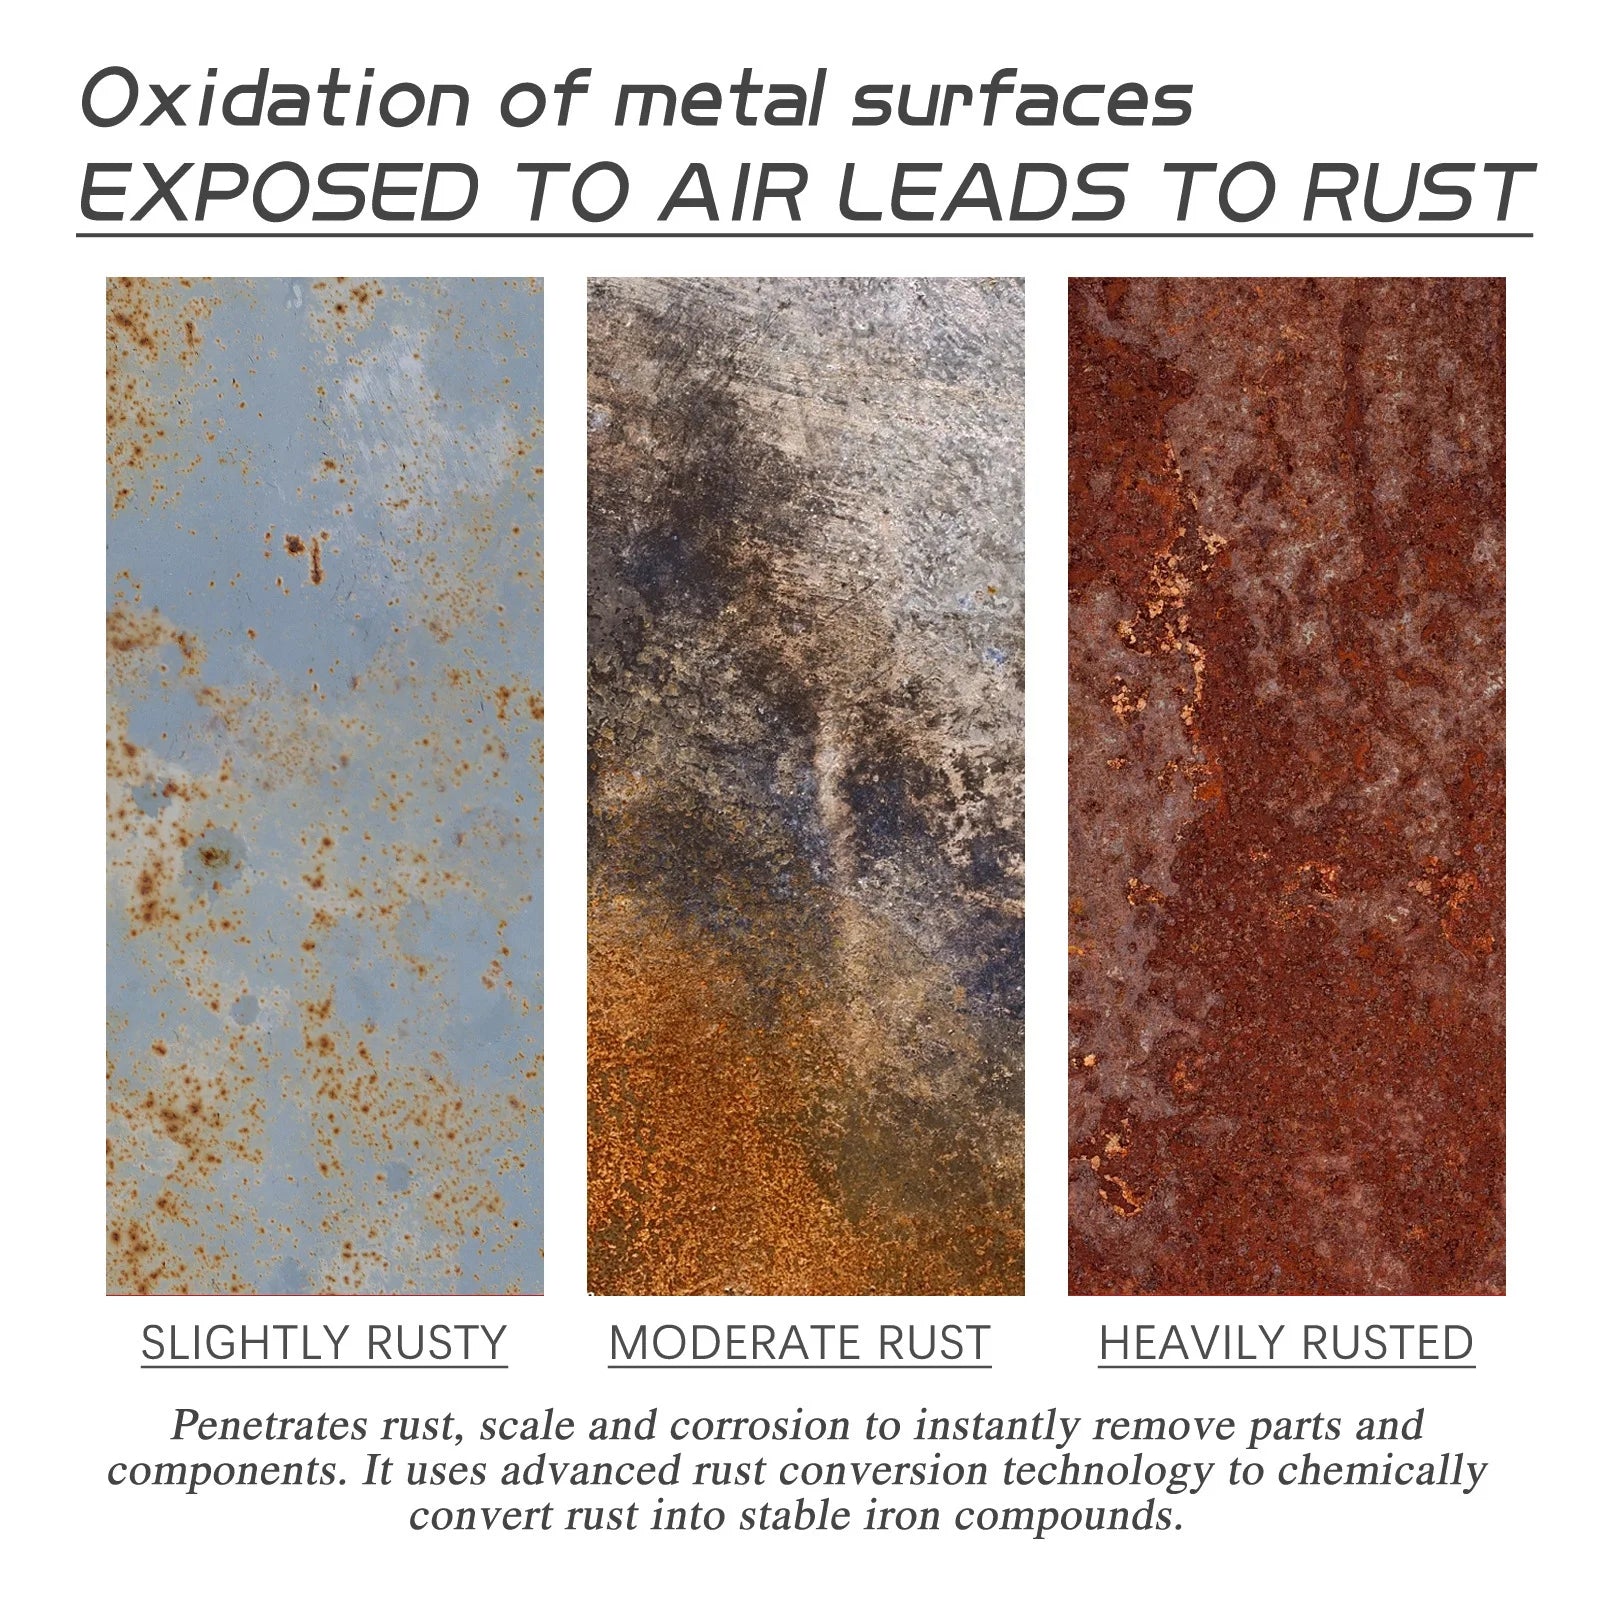 Multi Purpose Rust Remover Spray